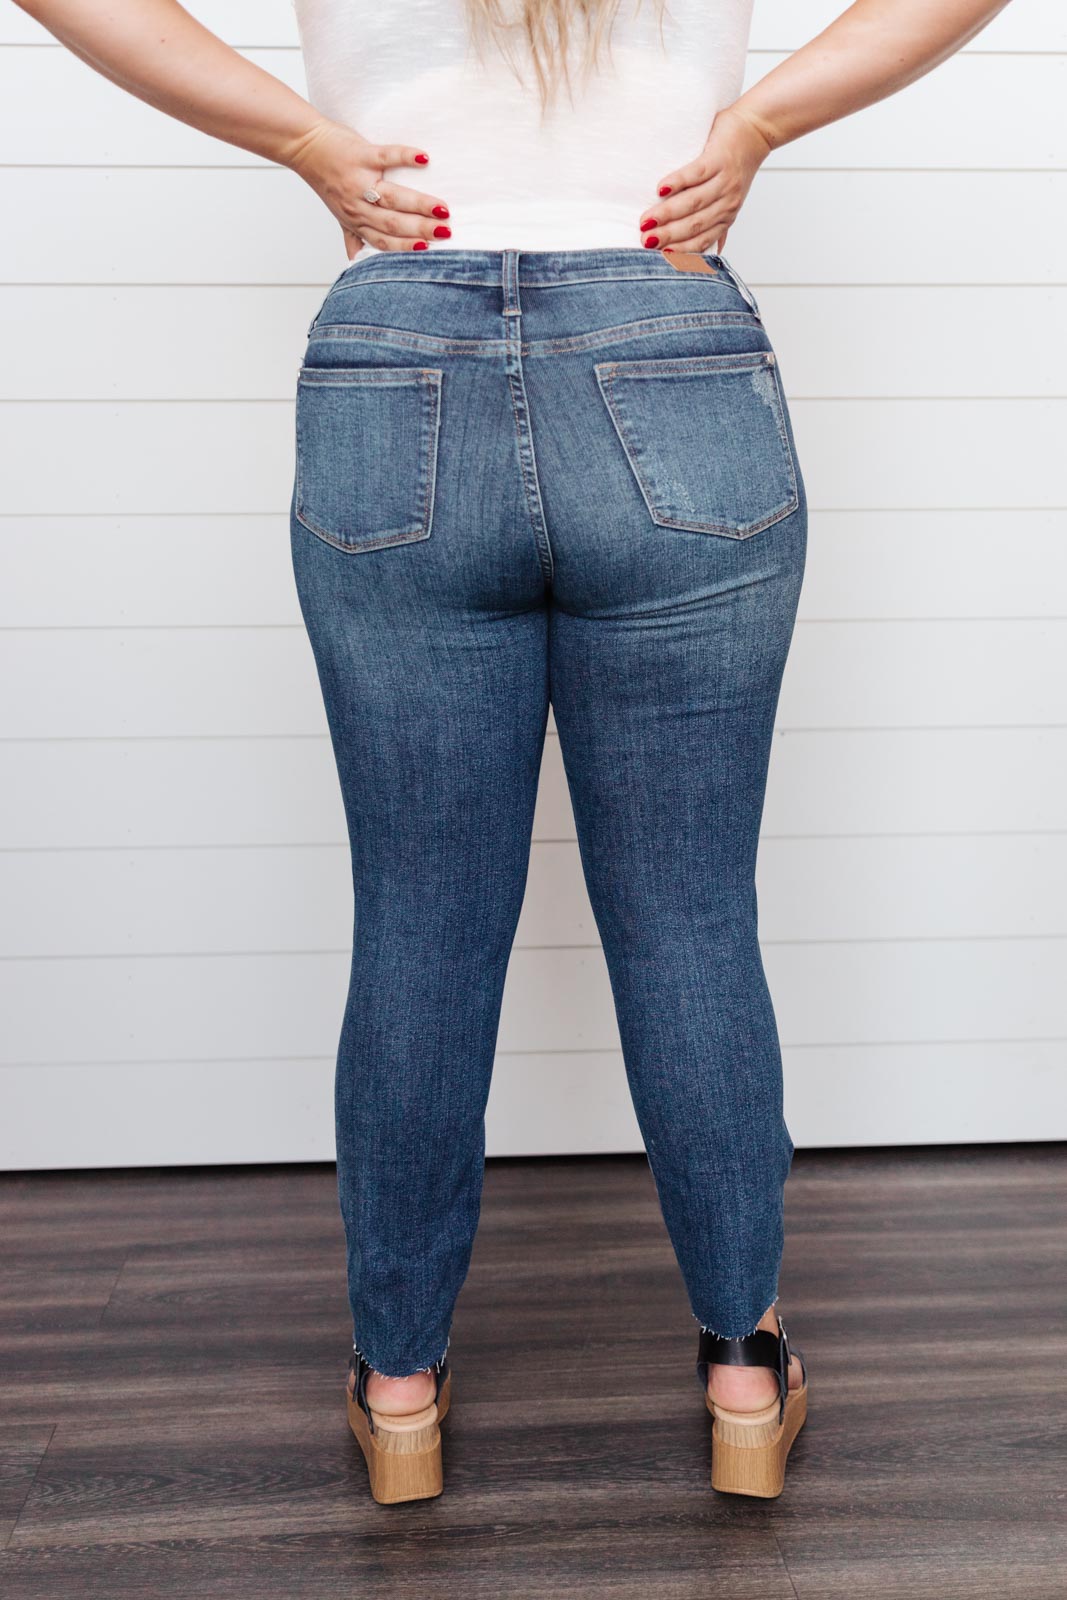 Vintage Indigo Cropped Skinny Jeans - 8/31/2021